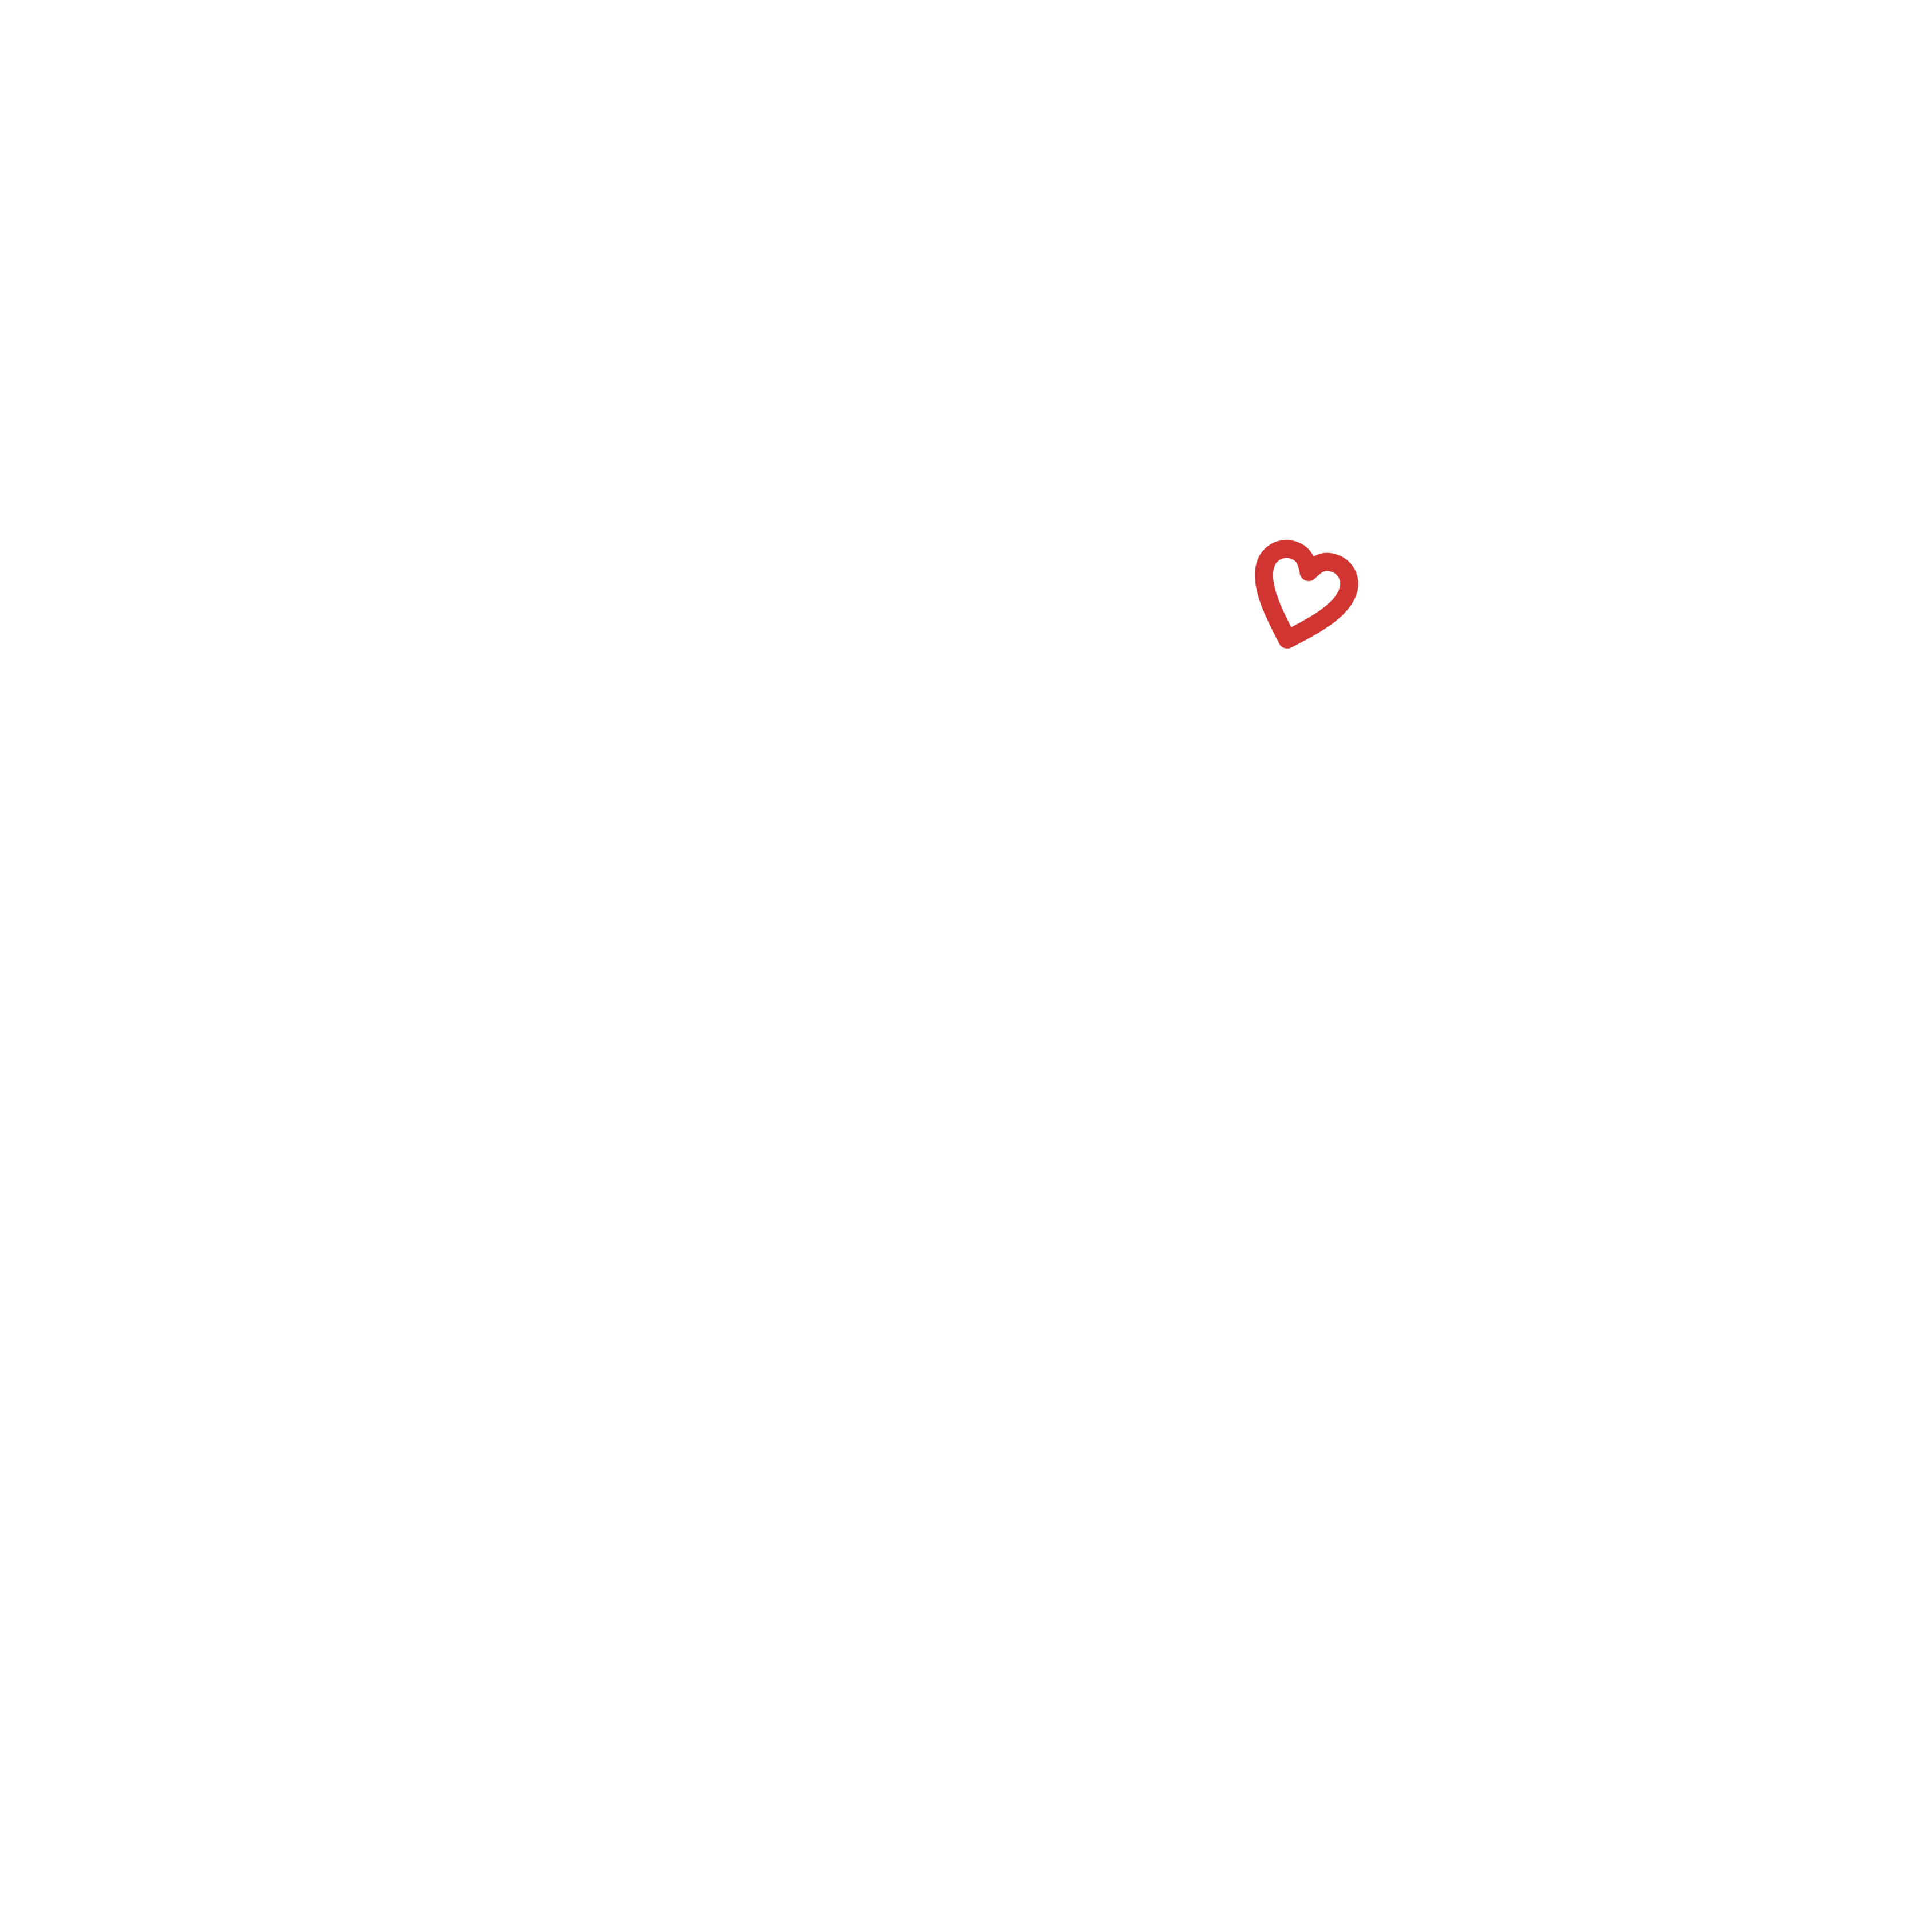 Monono Co.